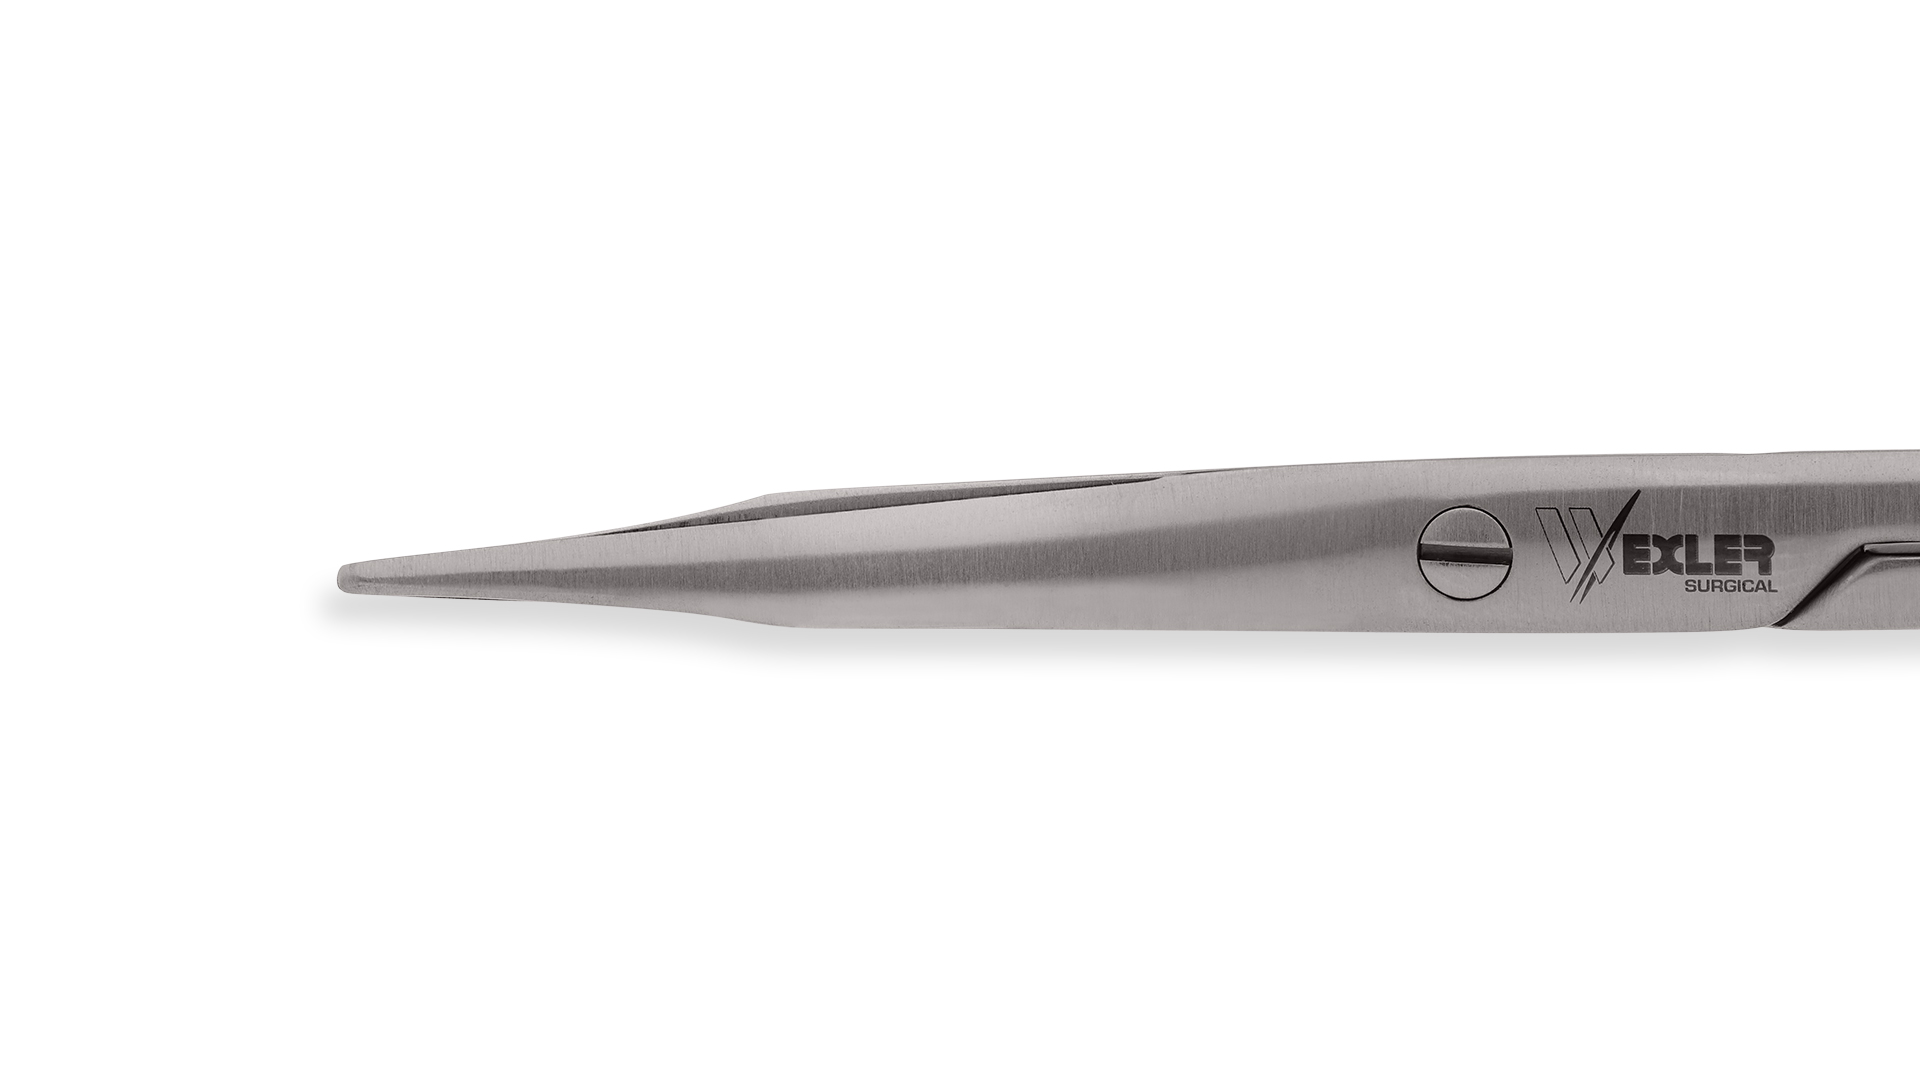 Lillehei-Potts Scissors - Curved Razor edge Blades w/Tenotomy tips